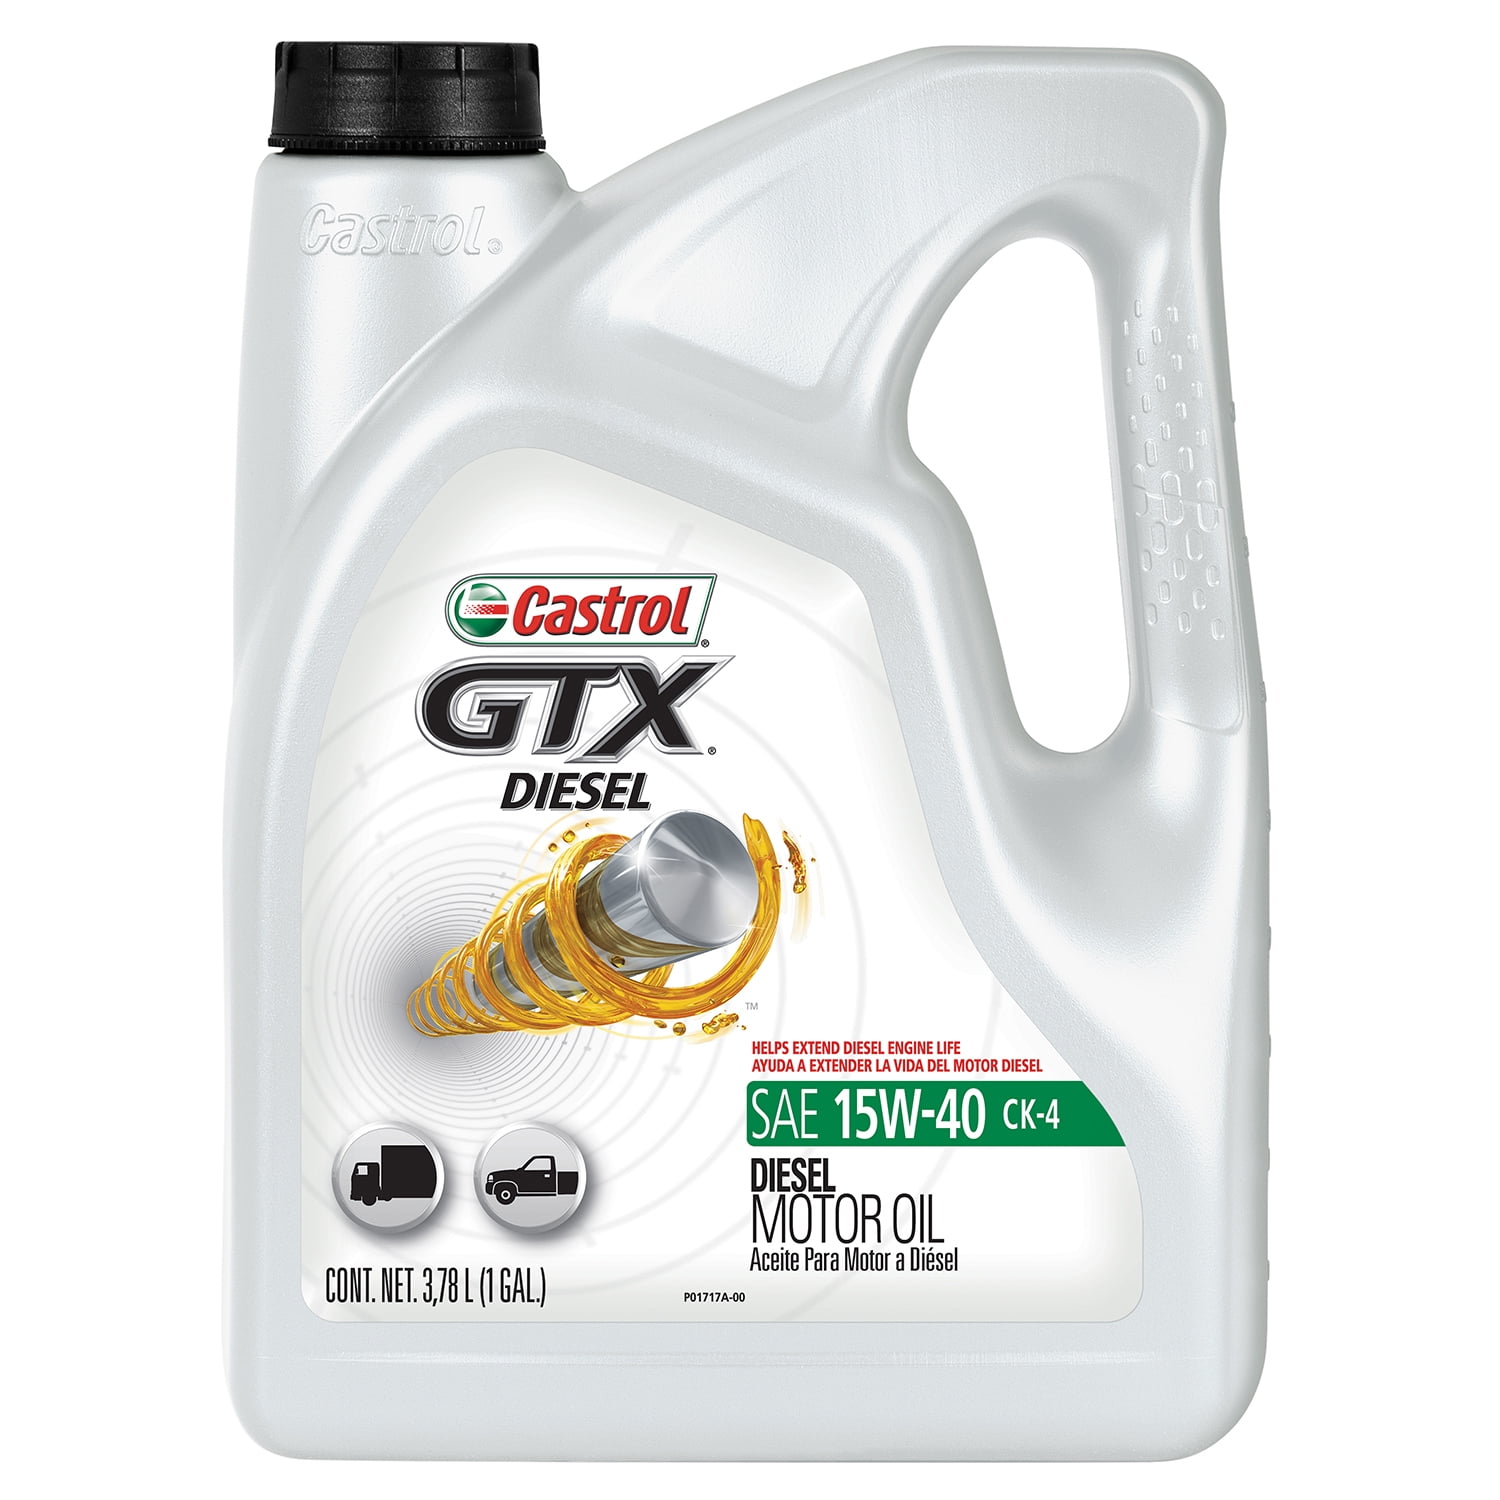 Castrol GTX CK-4 Conventional Diesel Motor Oil, 15W-40, 1 Gallon - Walmart.com - Walmart.com